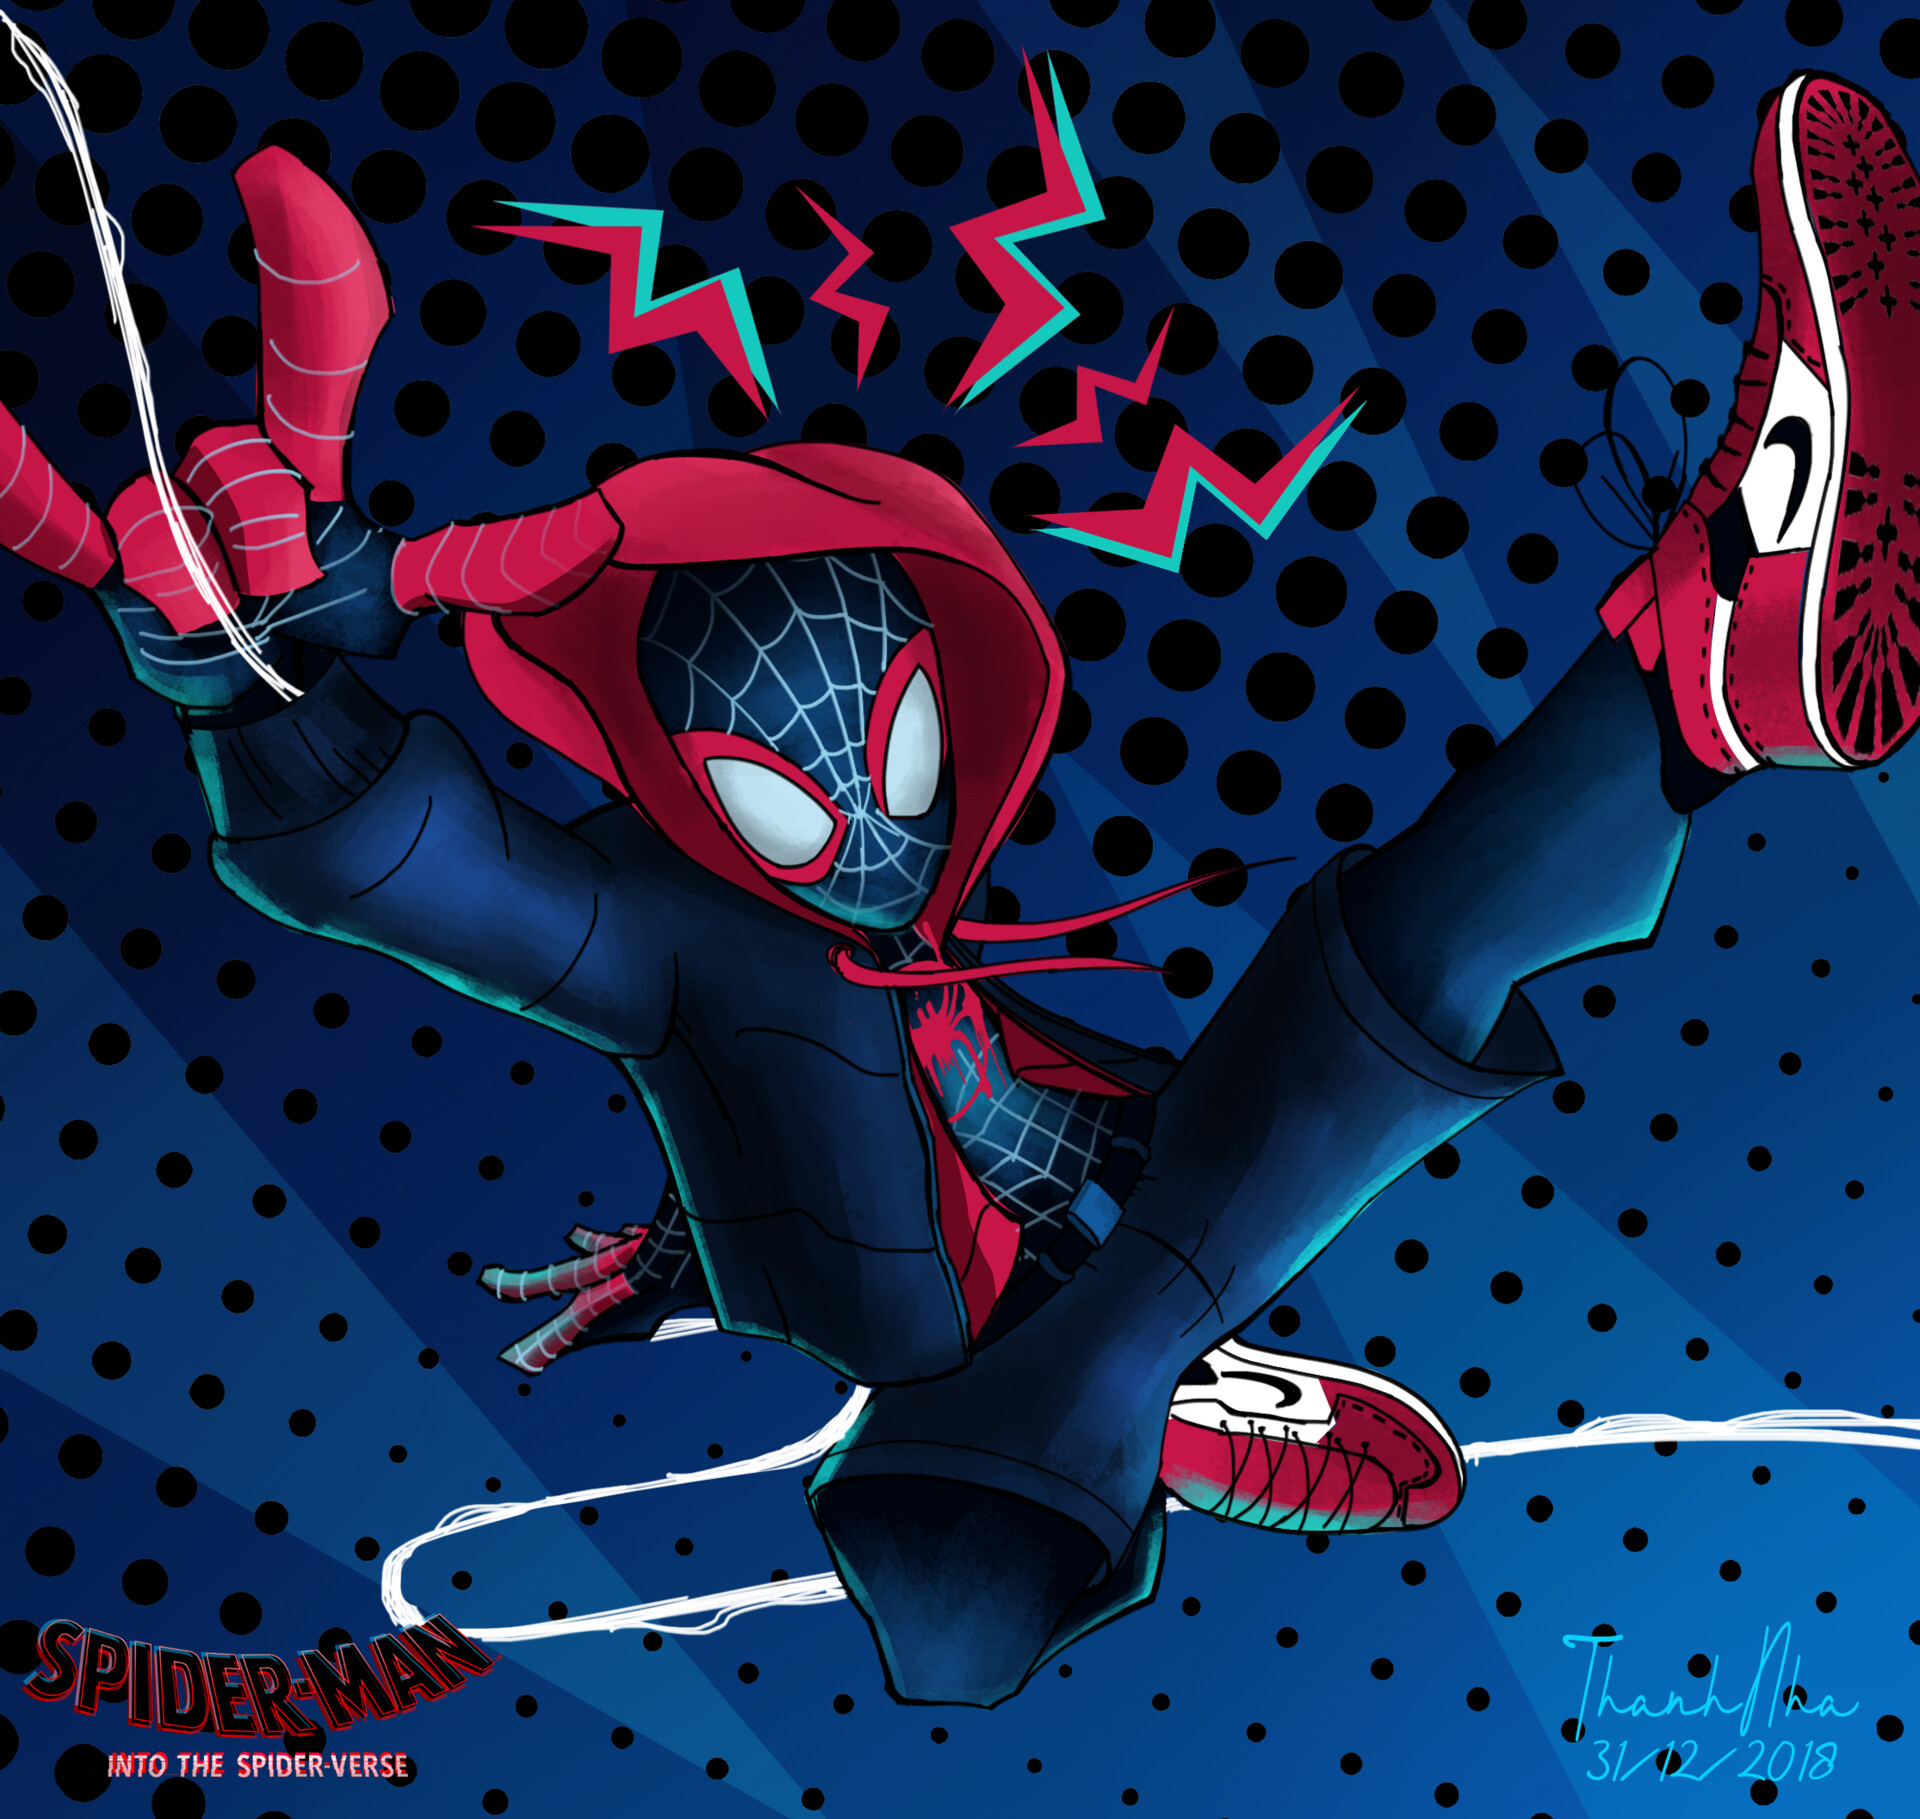 ArtStation - Spiderman into the Spider Verse